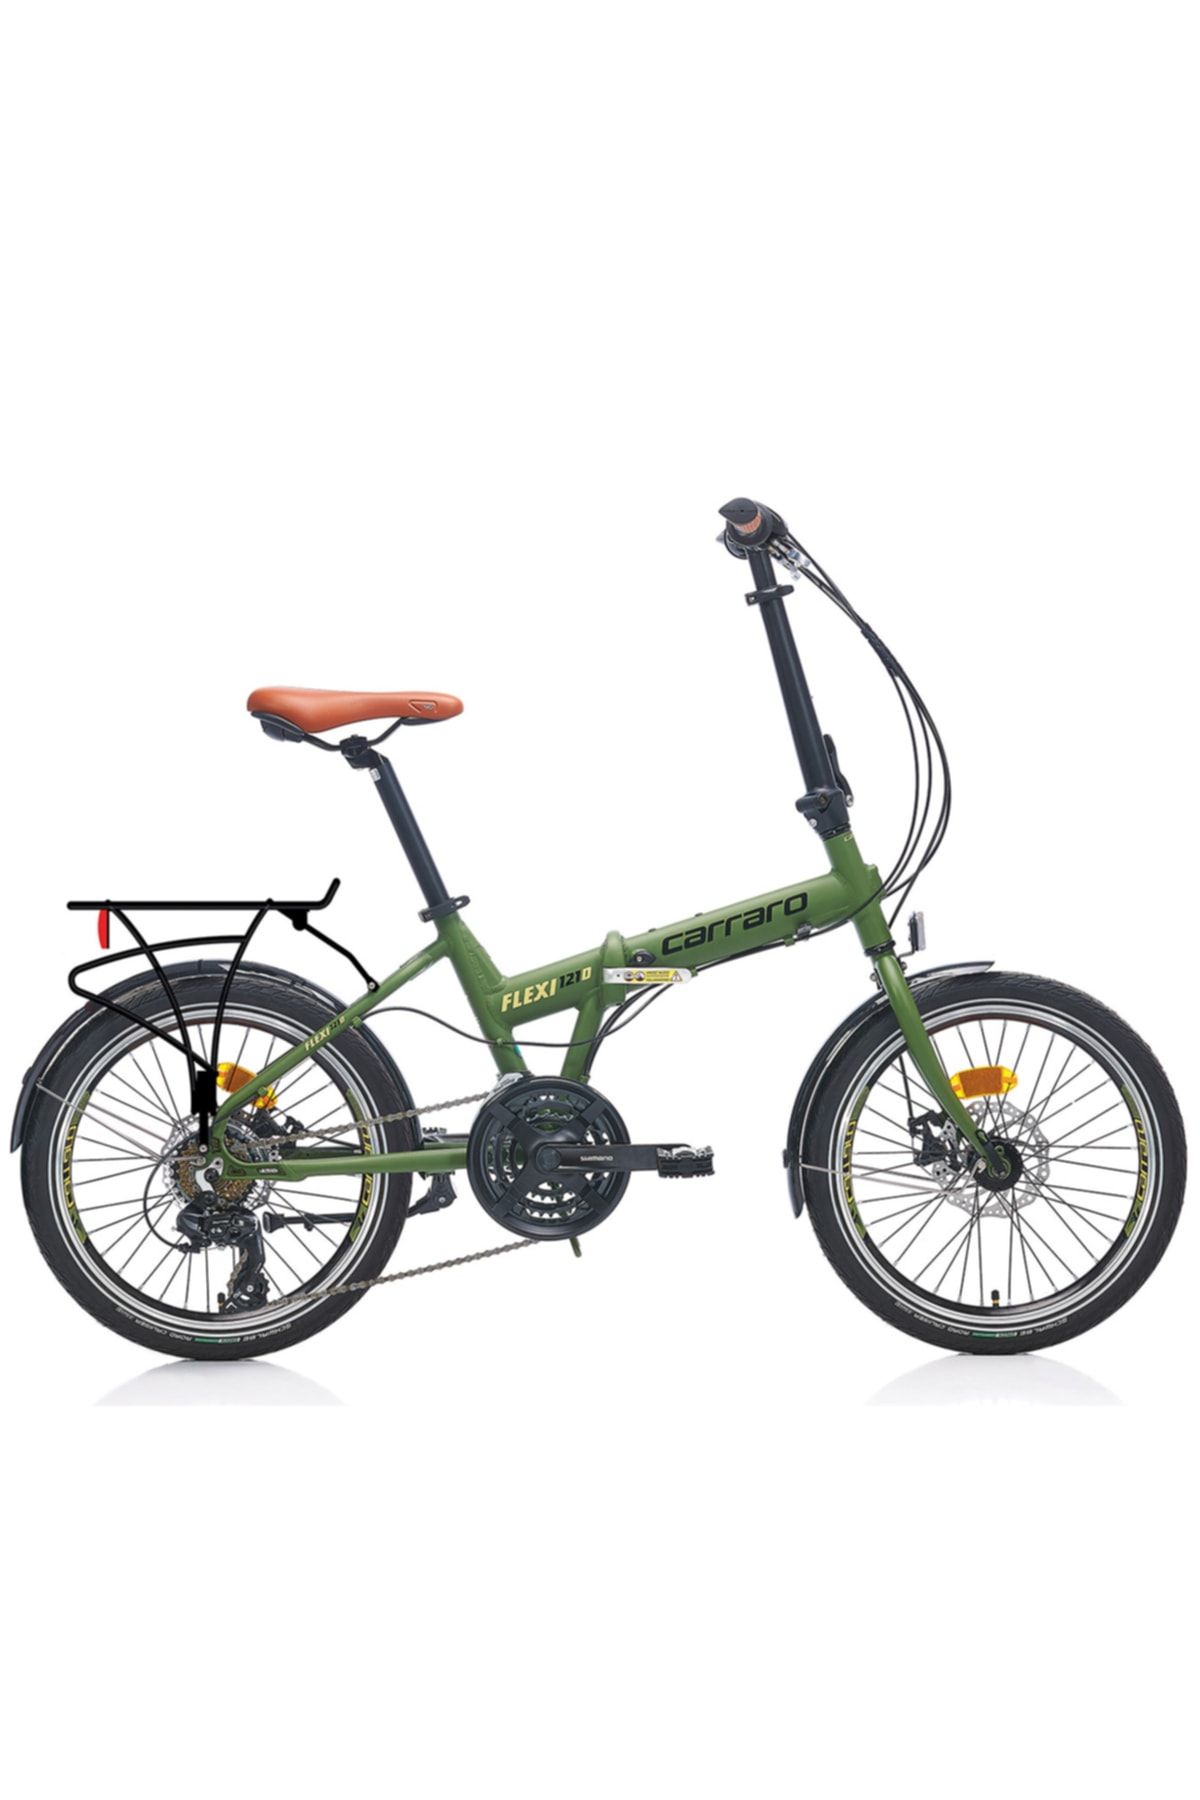 Carraro Flexi 121 D 20 Jant Katlanabilir Bisiklet Mat Haki Yeşil Siyah